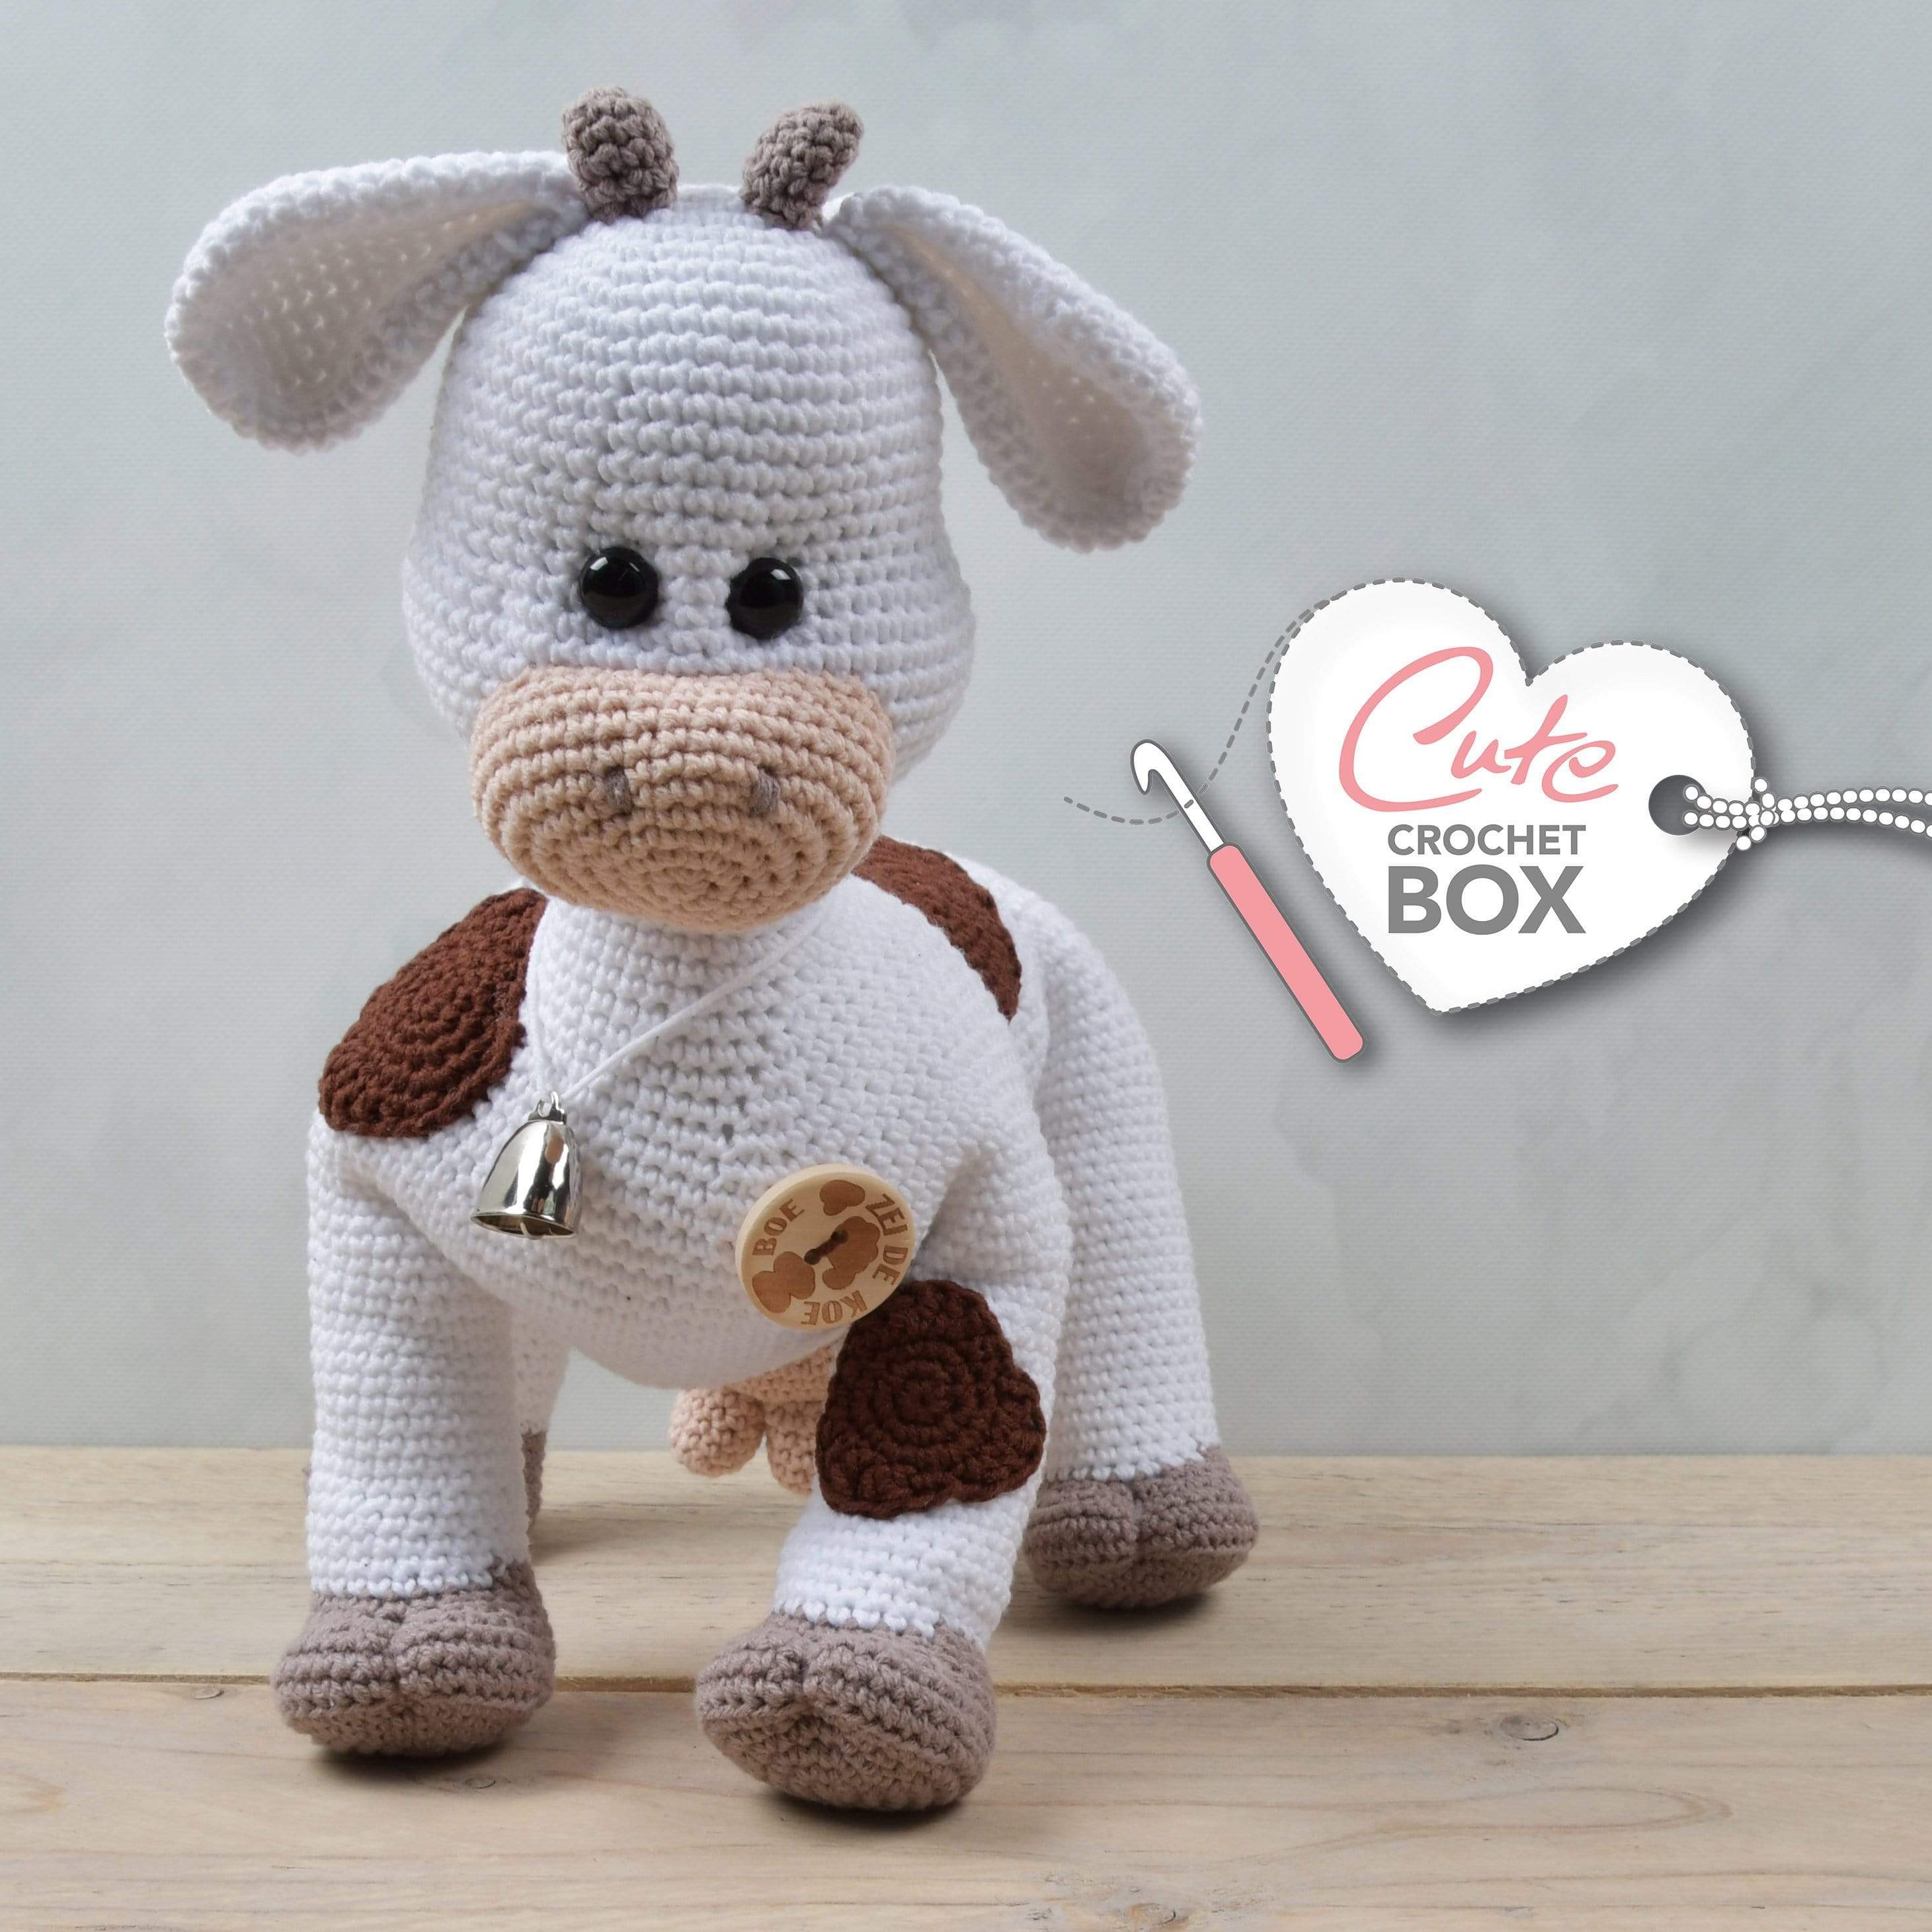 Ongewijzigd effectief Dreigend Cute Crochet Box nr. 12 - Koe Karin | CuteDutch